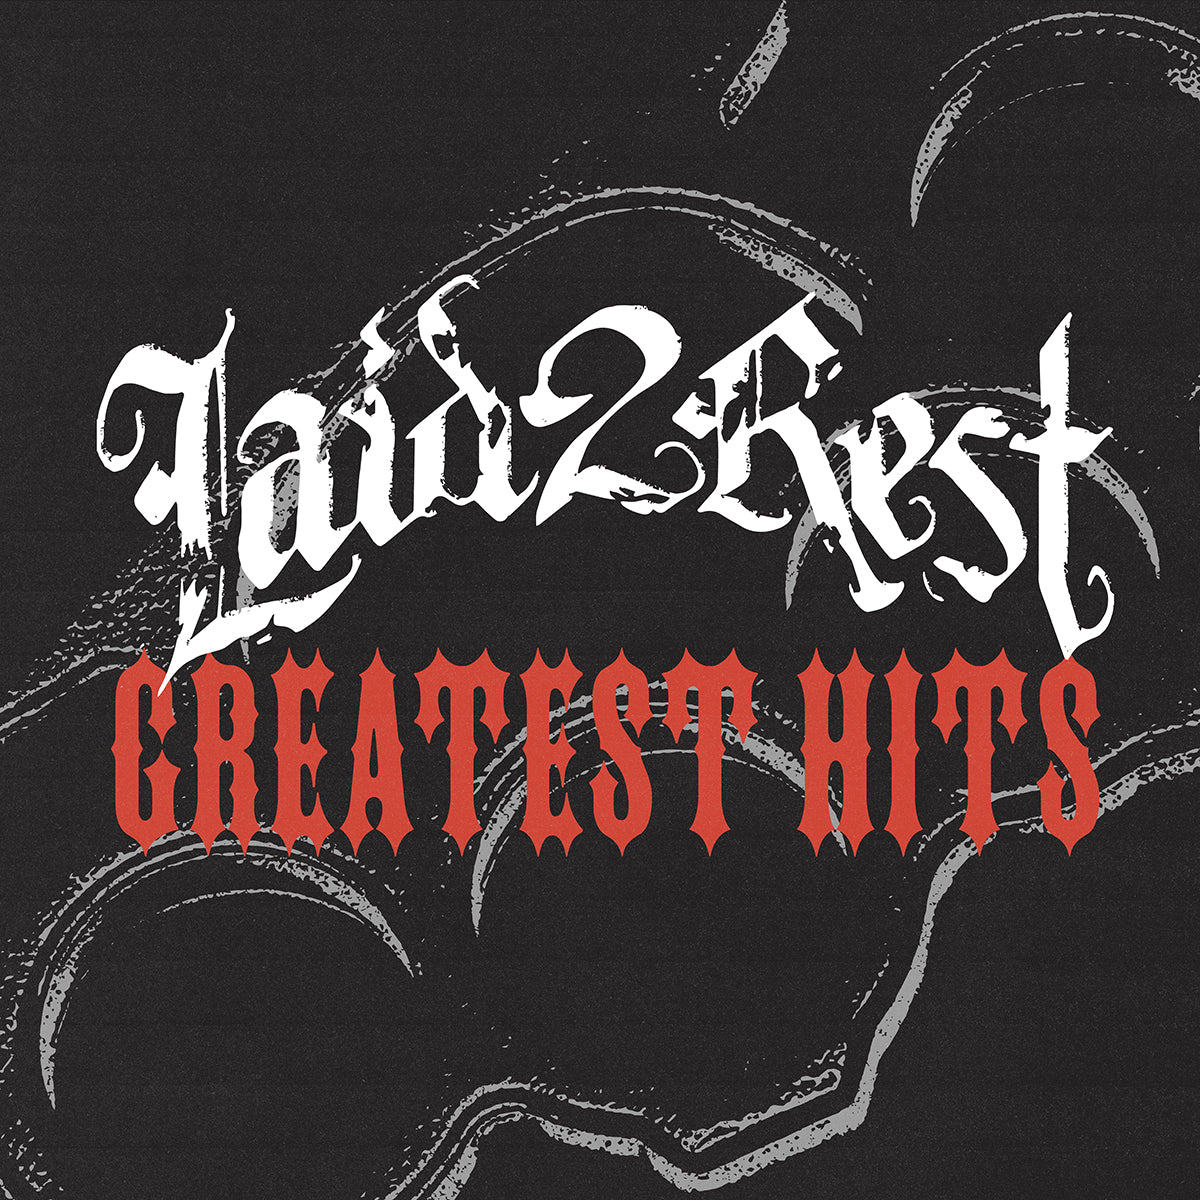 LAID 2 REST "Greatest Hits" LP